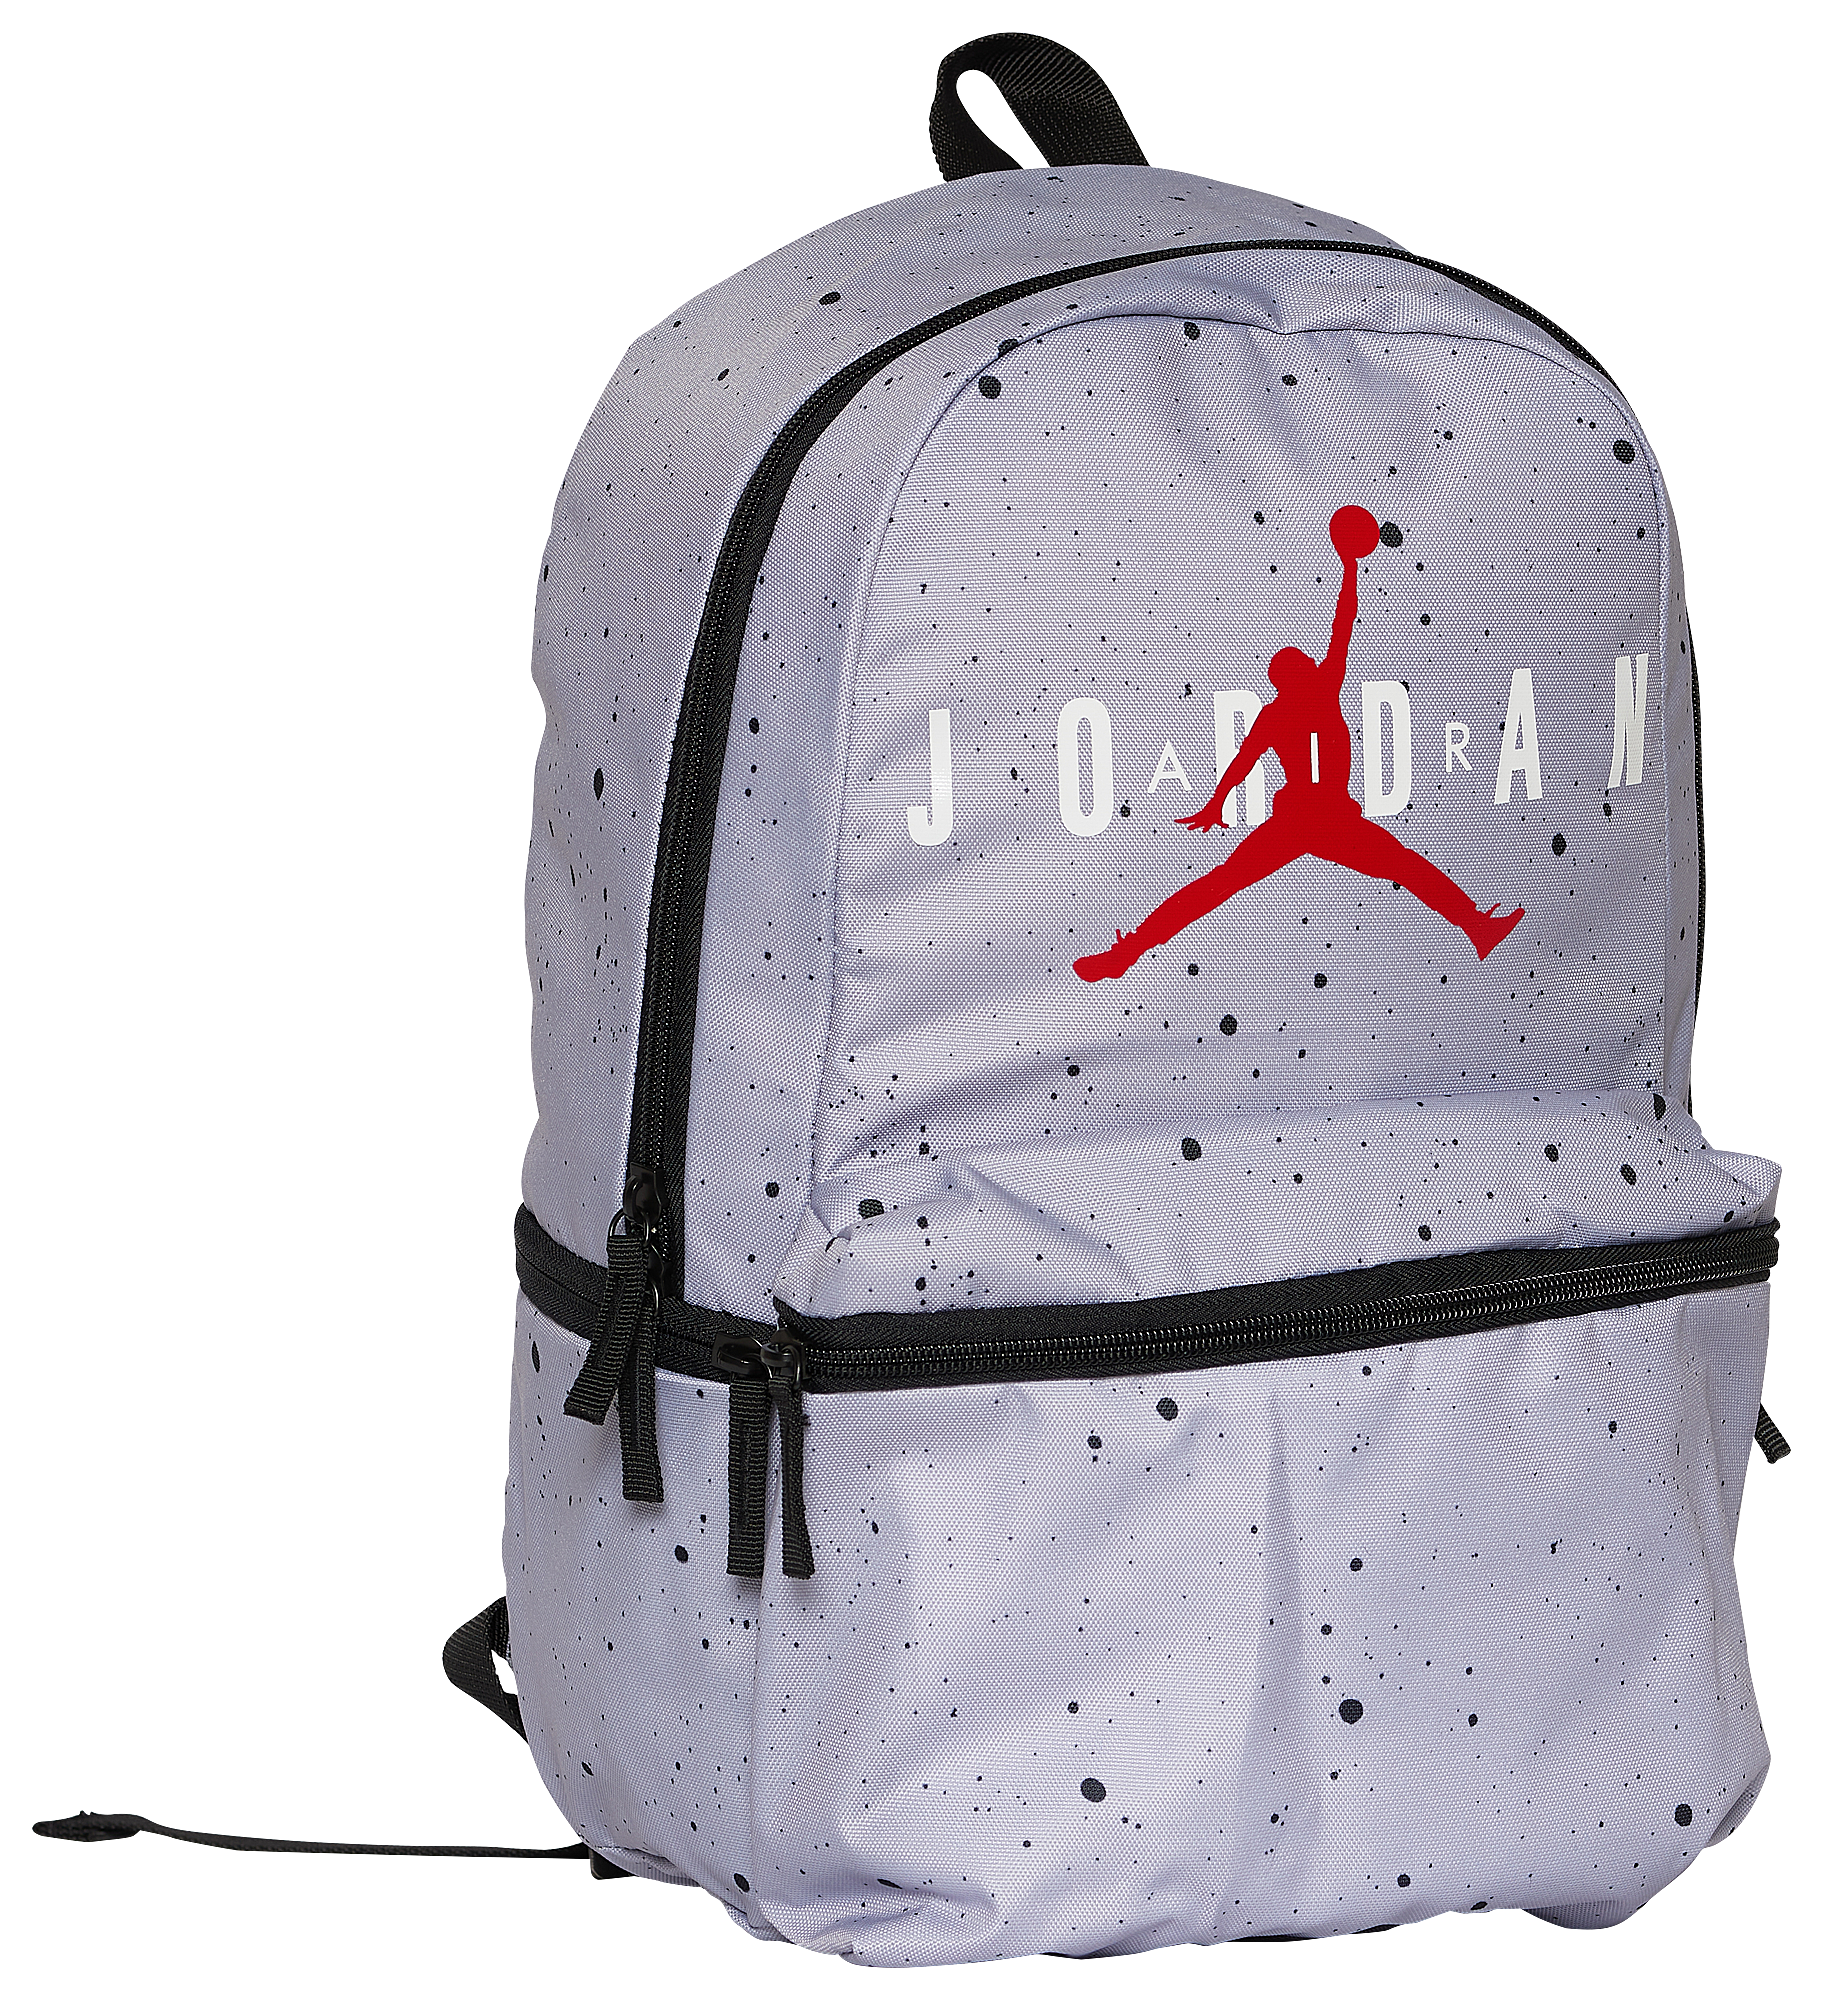 kids jordan backpack